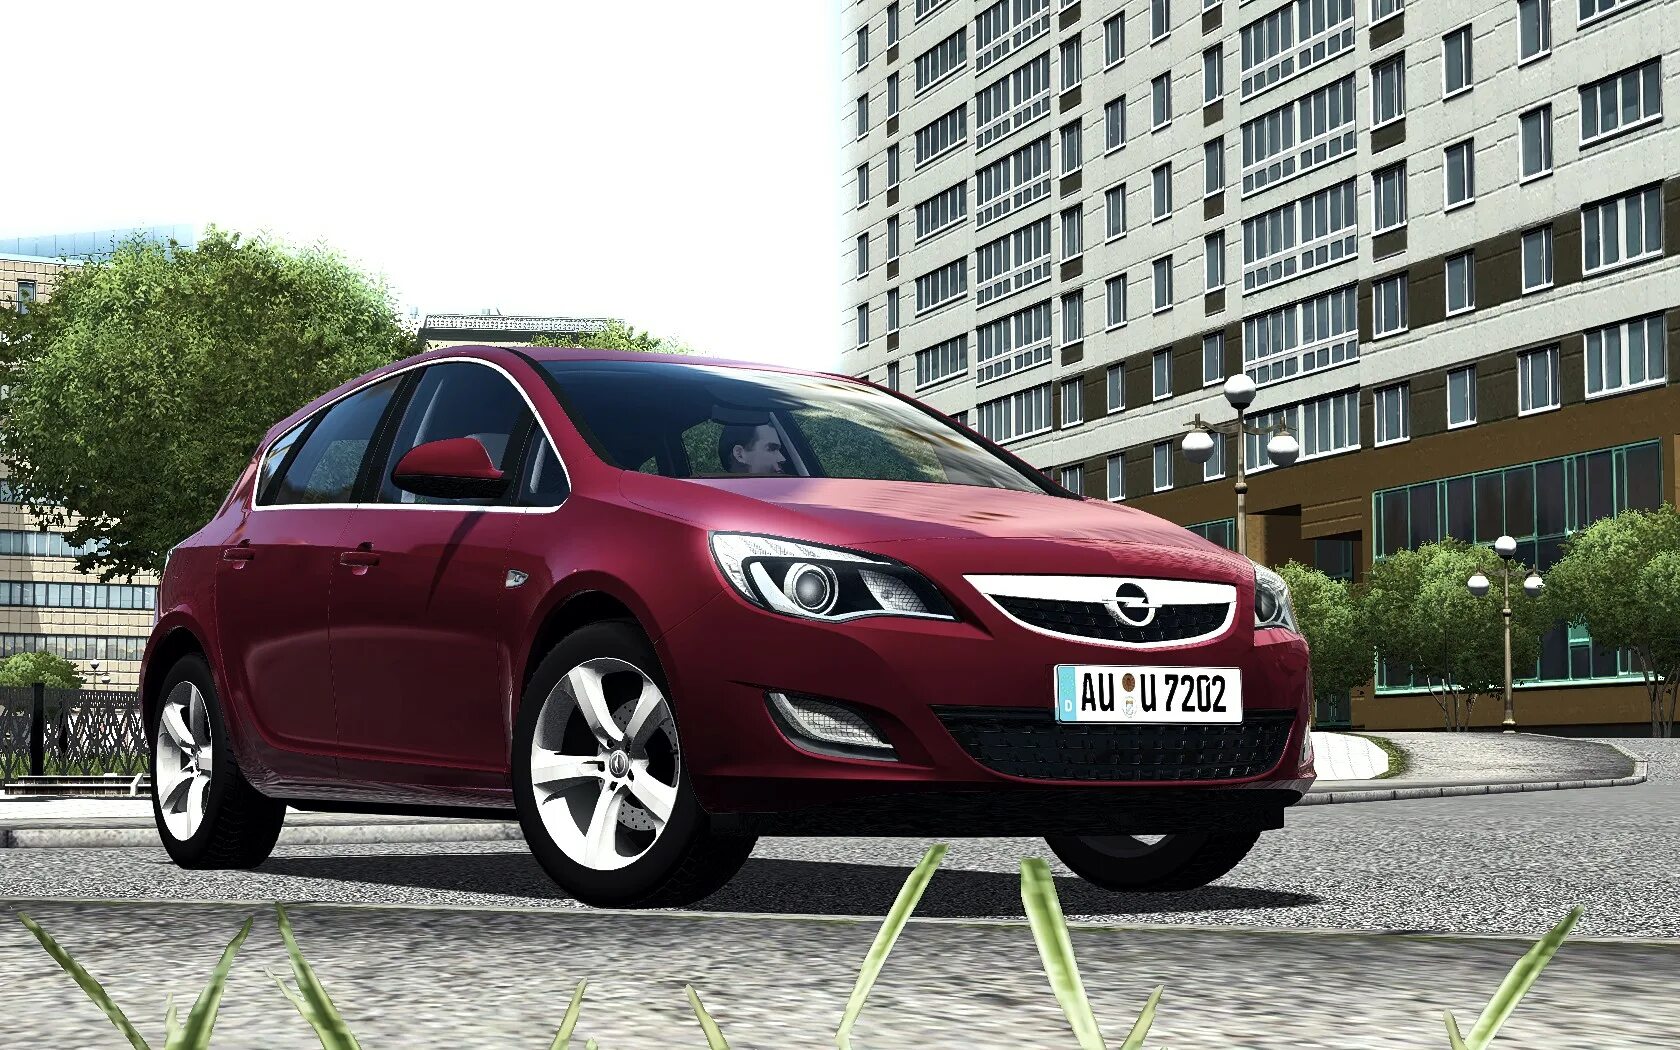 Opel Astra City car Driving 1.5.9.2. Opel Astra g для City car Driving.